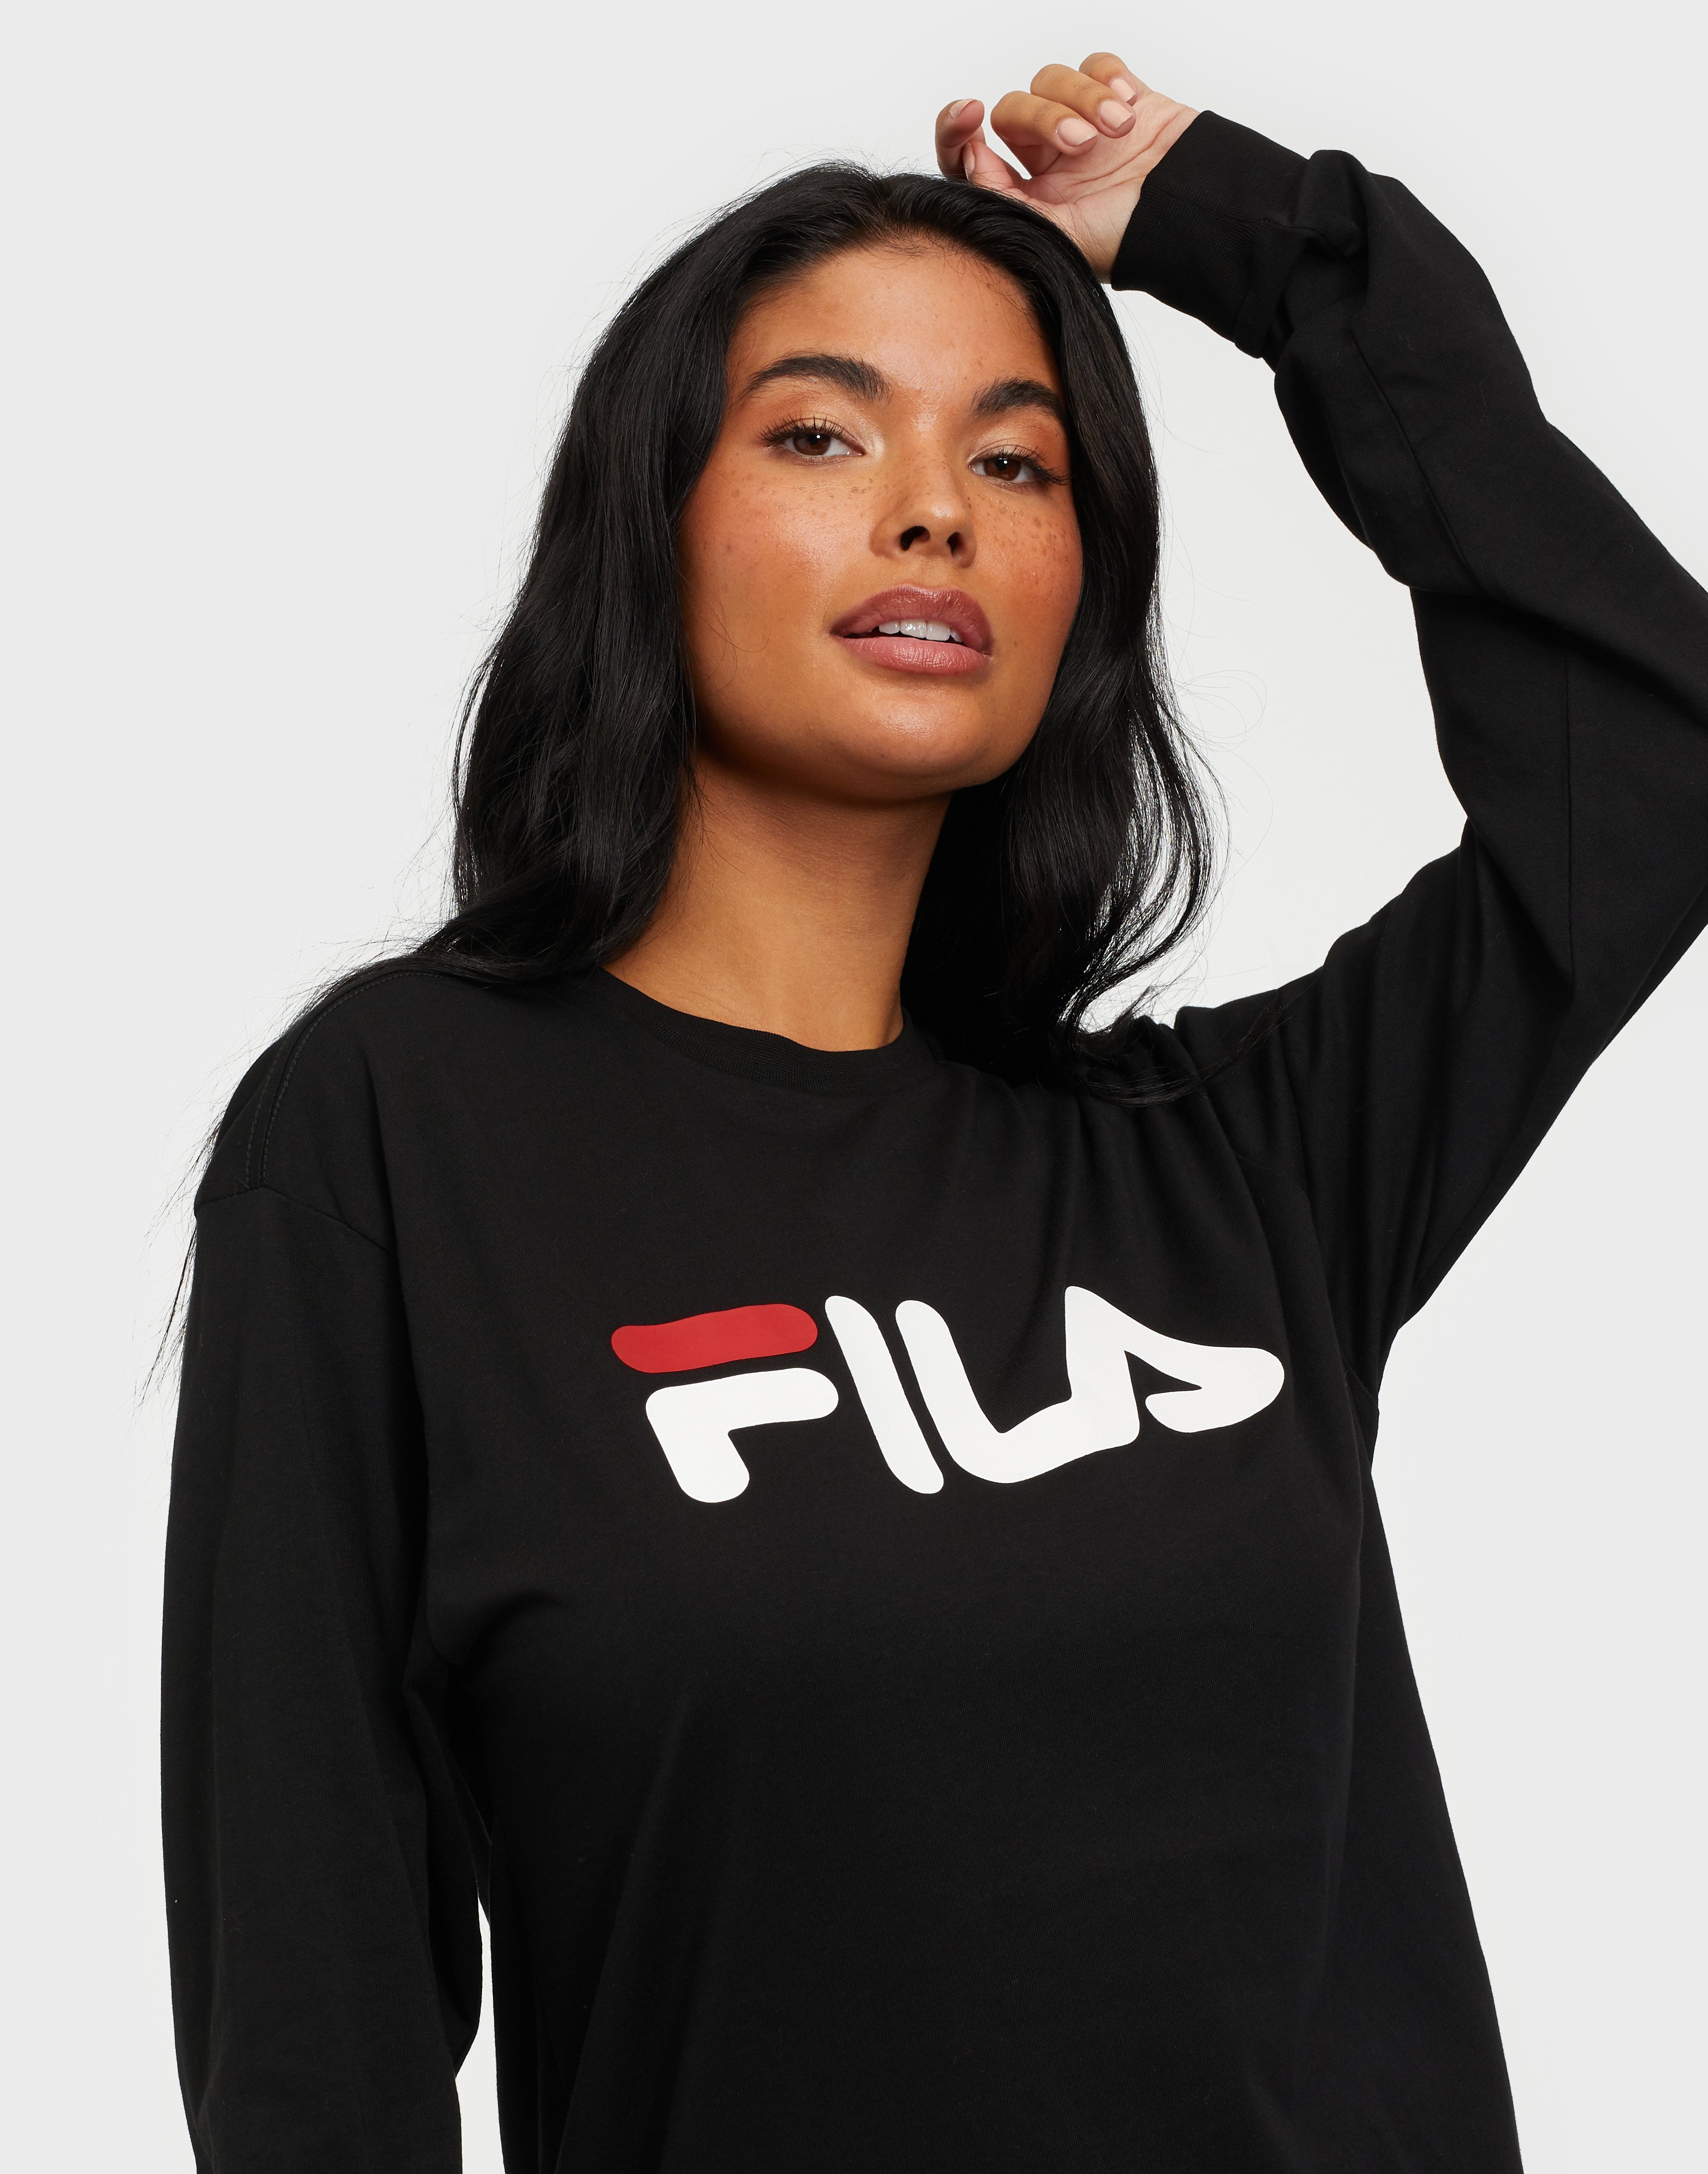 Buy Fila UNISEX CLASSIC PURE long sleeve shirt Black